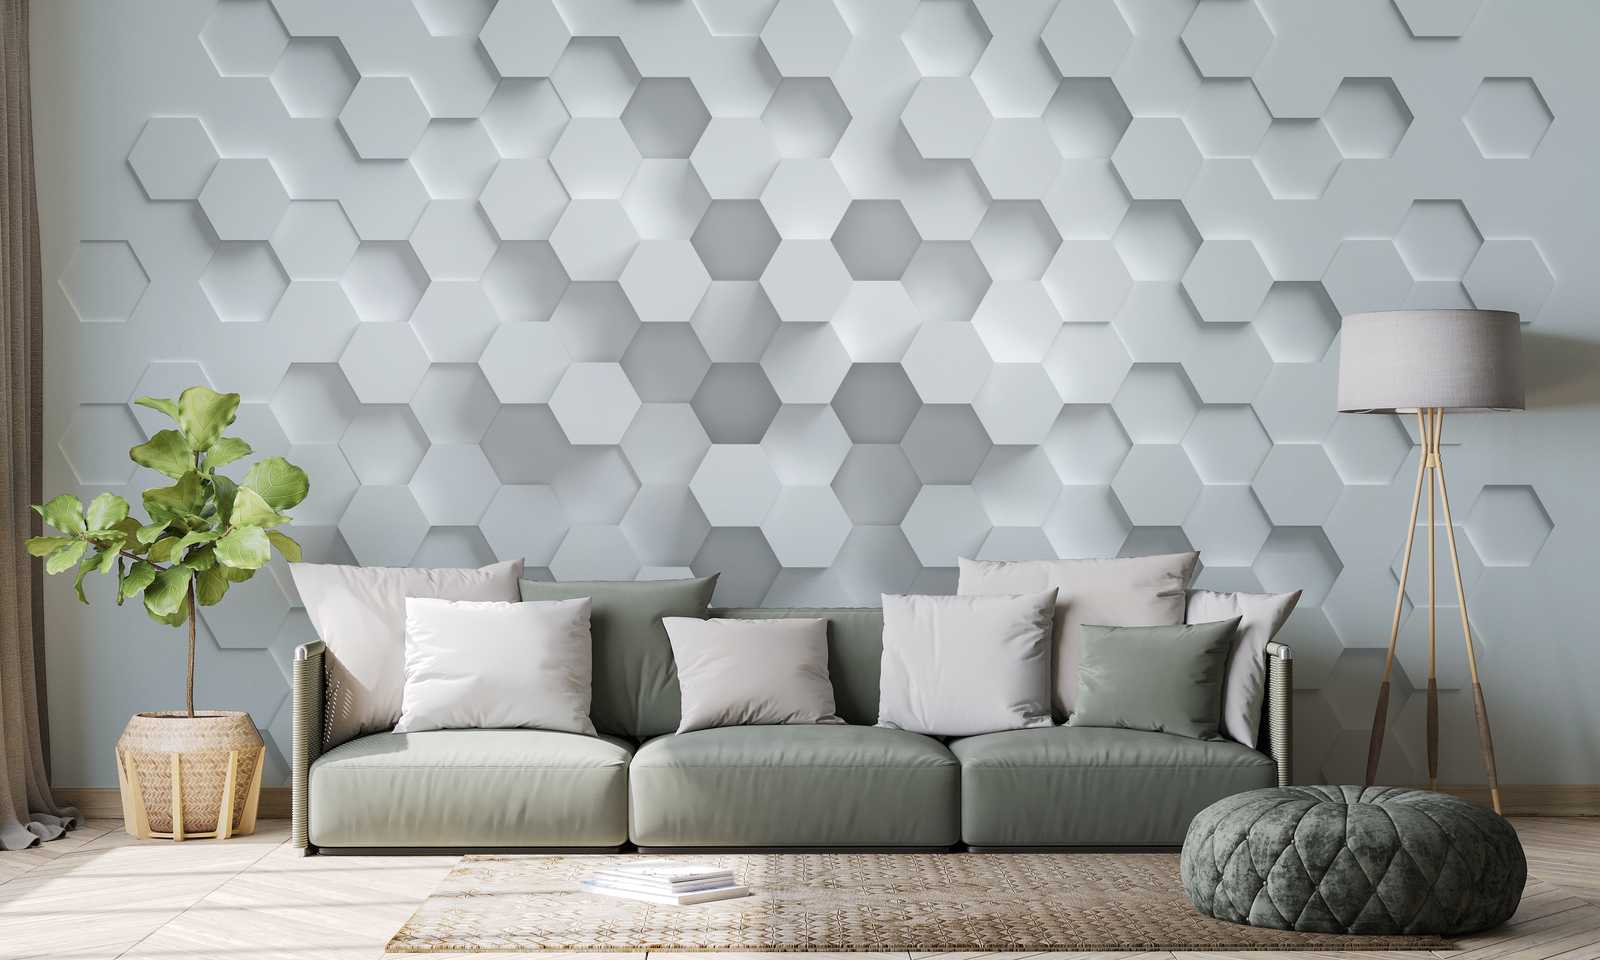             Wallpaper novelty | 3D motif wallpaper with honeycomb pattern, white & grey
        